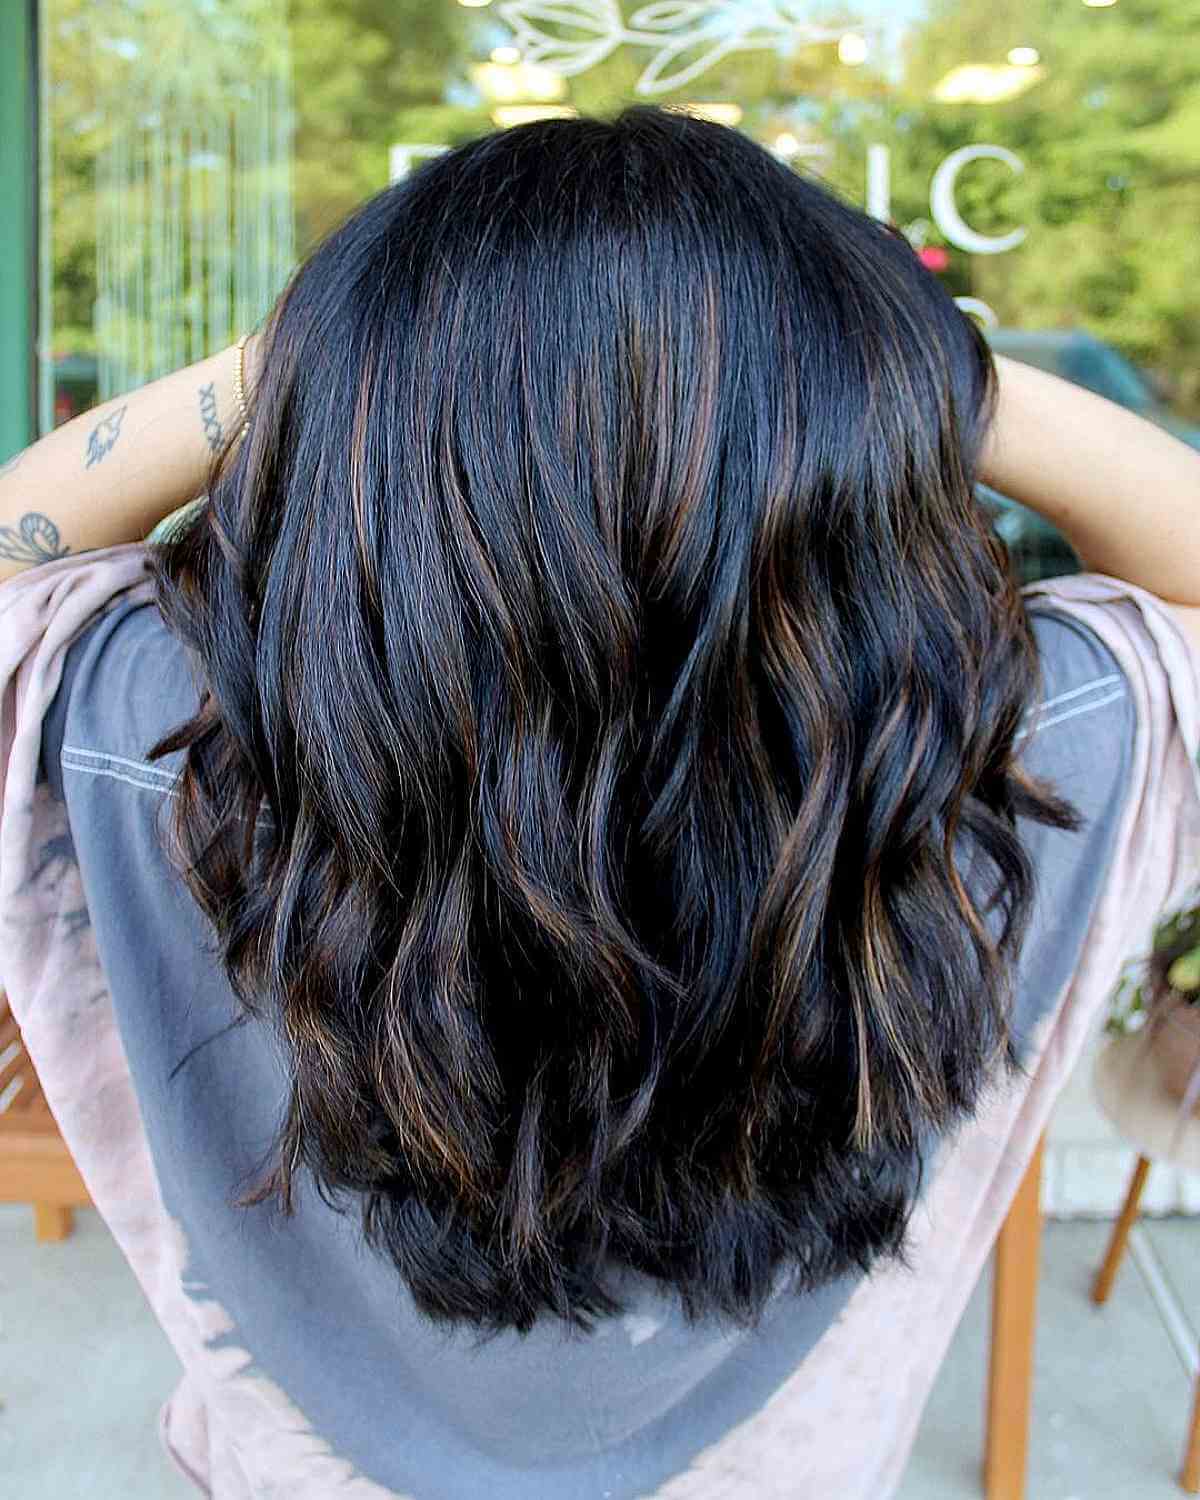 Medium-Length Black Hair with Light Brown Highlights